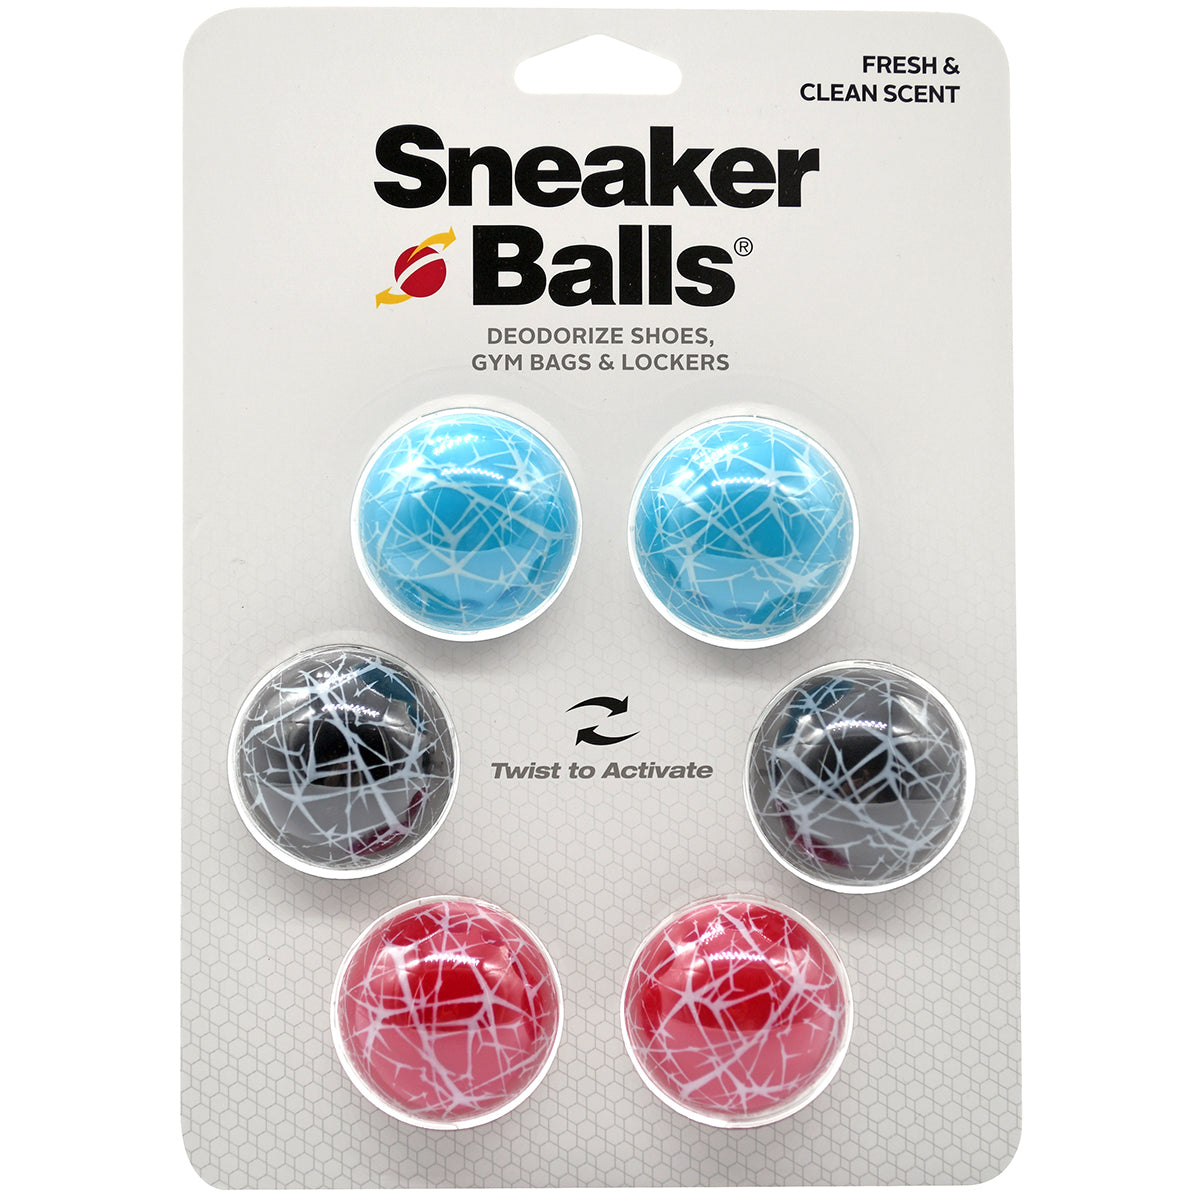 Sneaker Balls 6-Pack Scratched Shoe Freshener Sneaker Balls